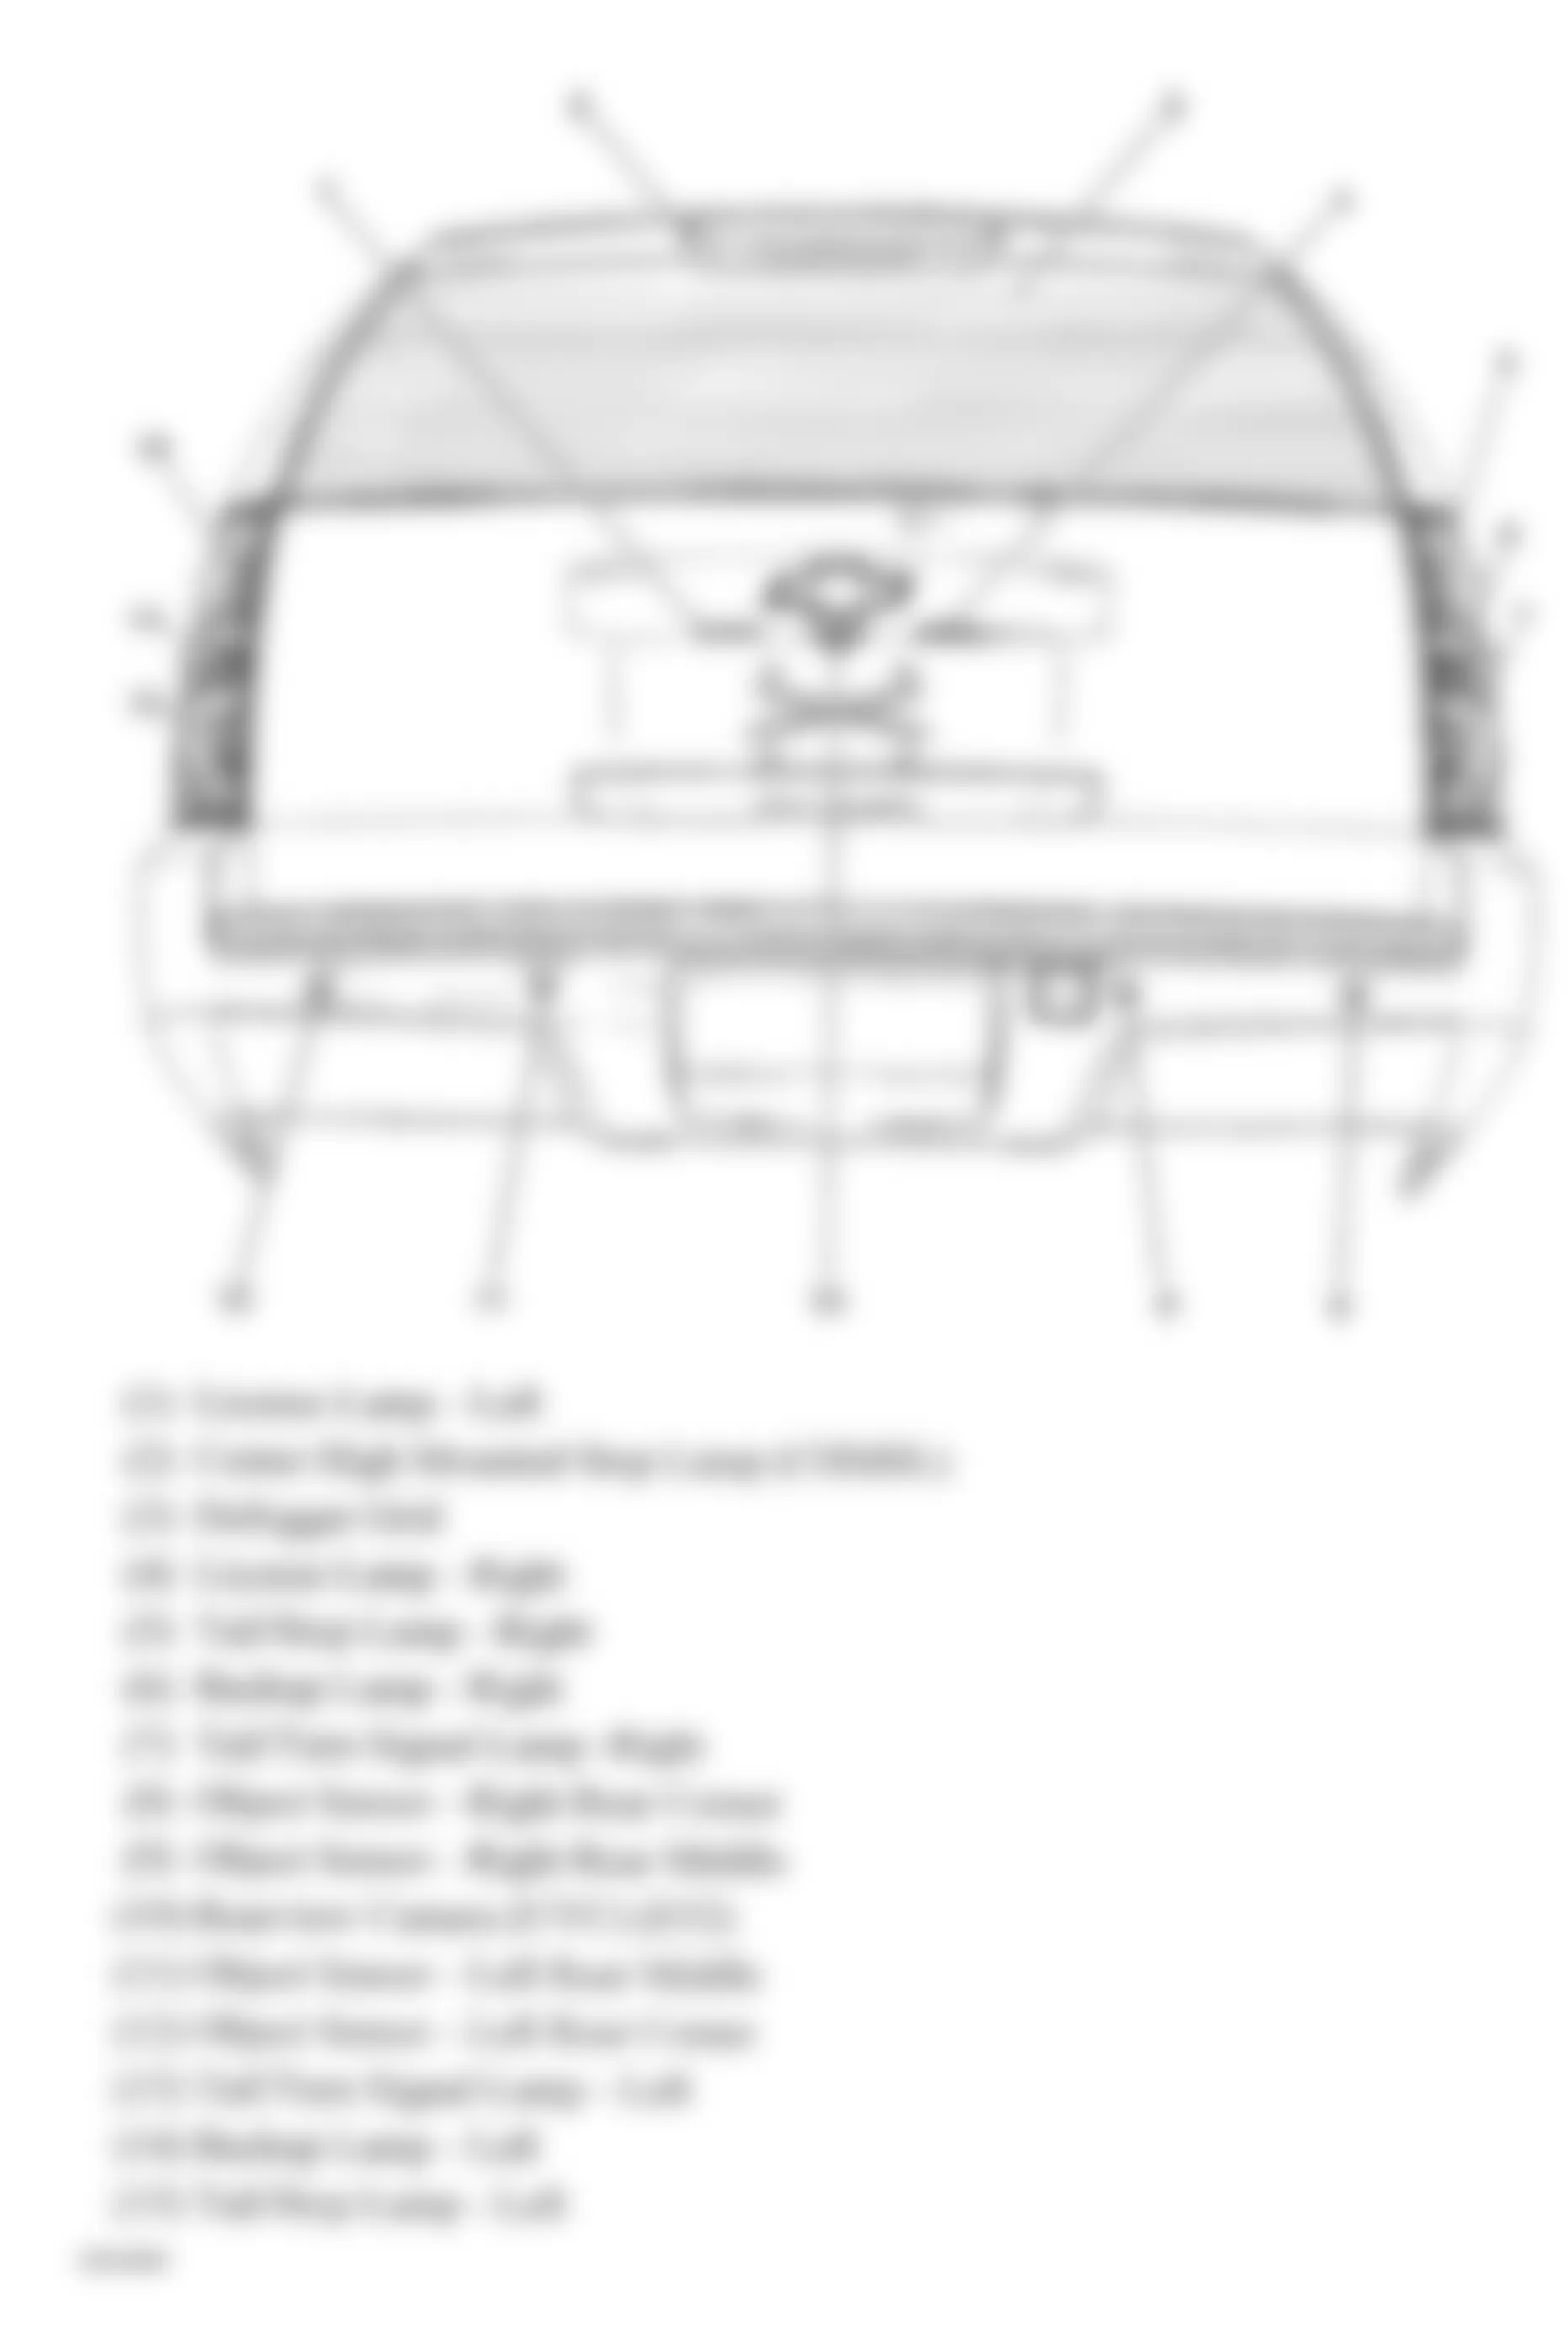 GMC Yukon Denali 2009 - Component Locations -  Rear Of Vehicle (Avalanche, Suburban & Tahoe W/One Piece Liftgate)